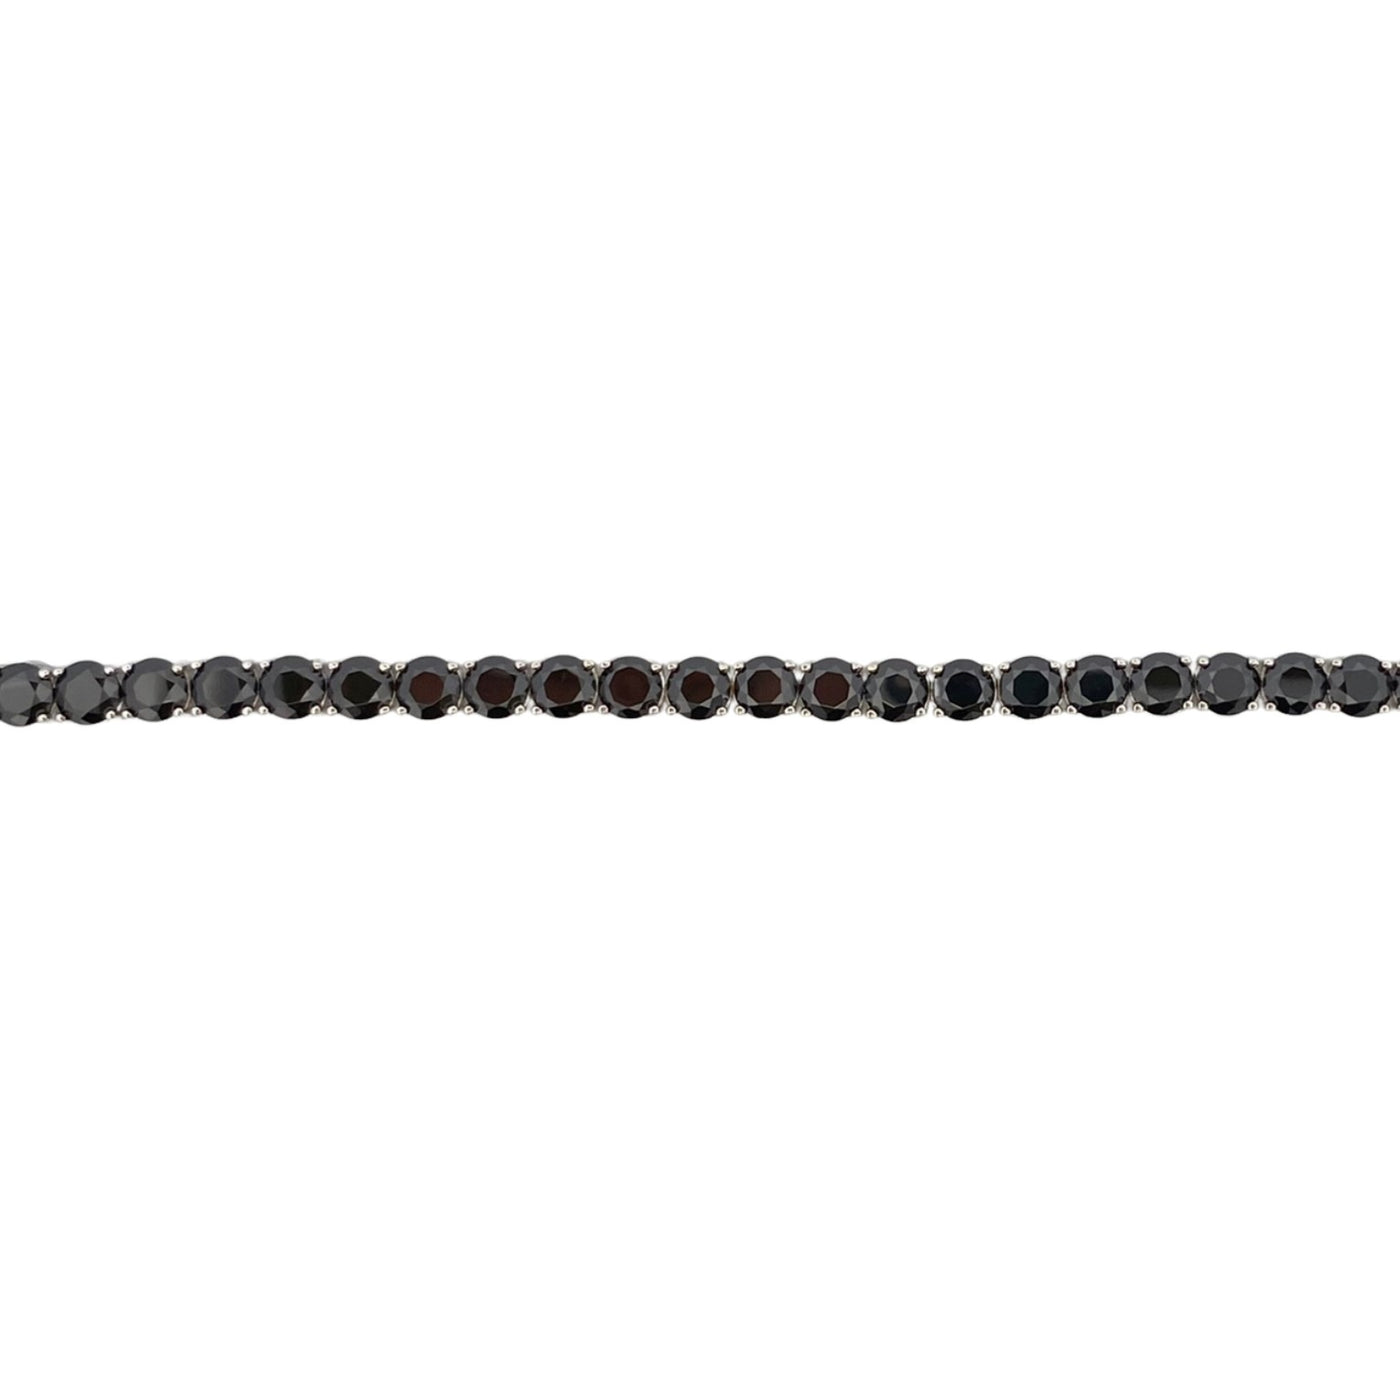 Silver casting tennis bracelet with black zirconia - 5 mm